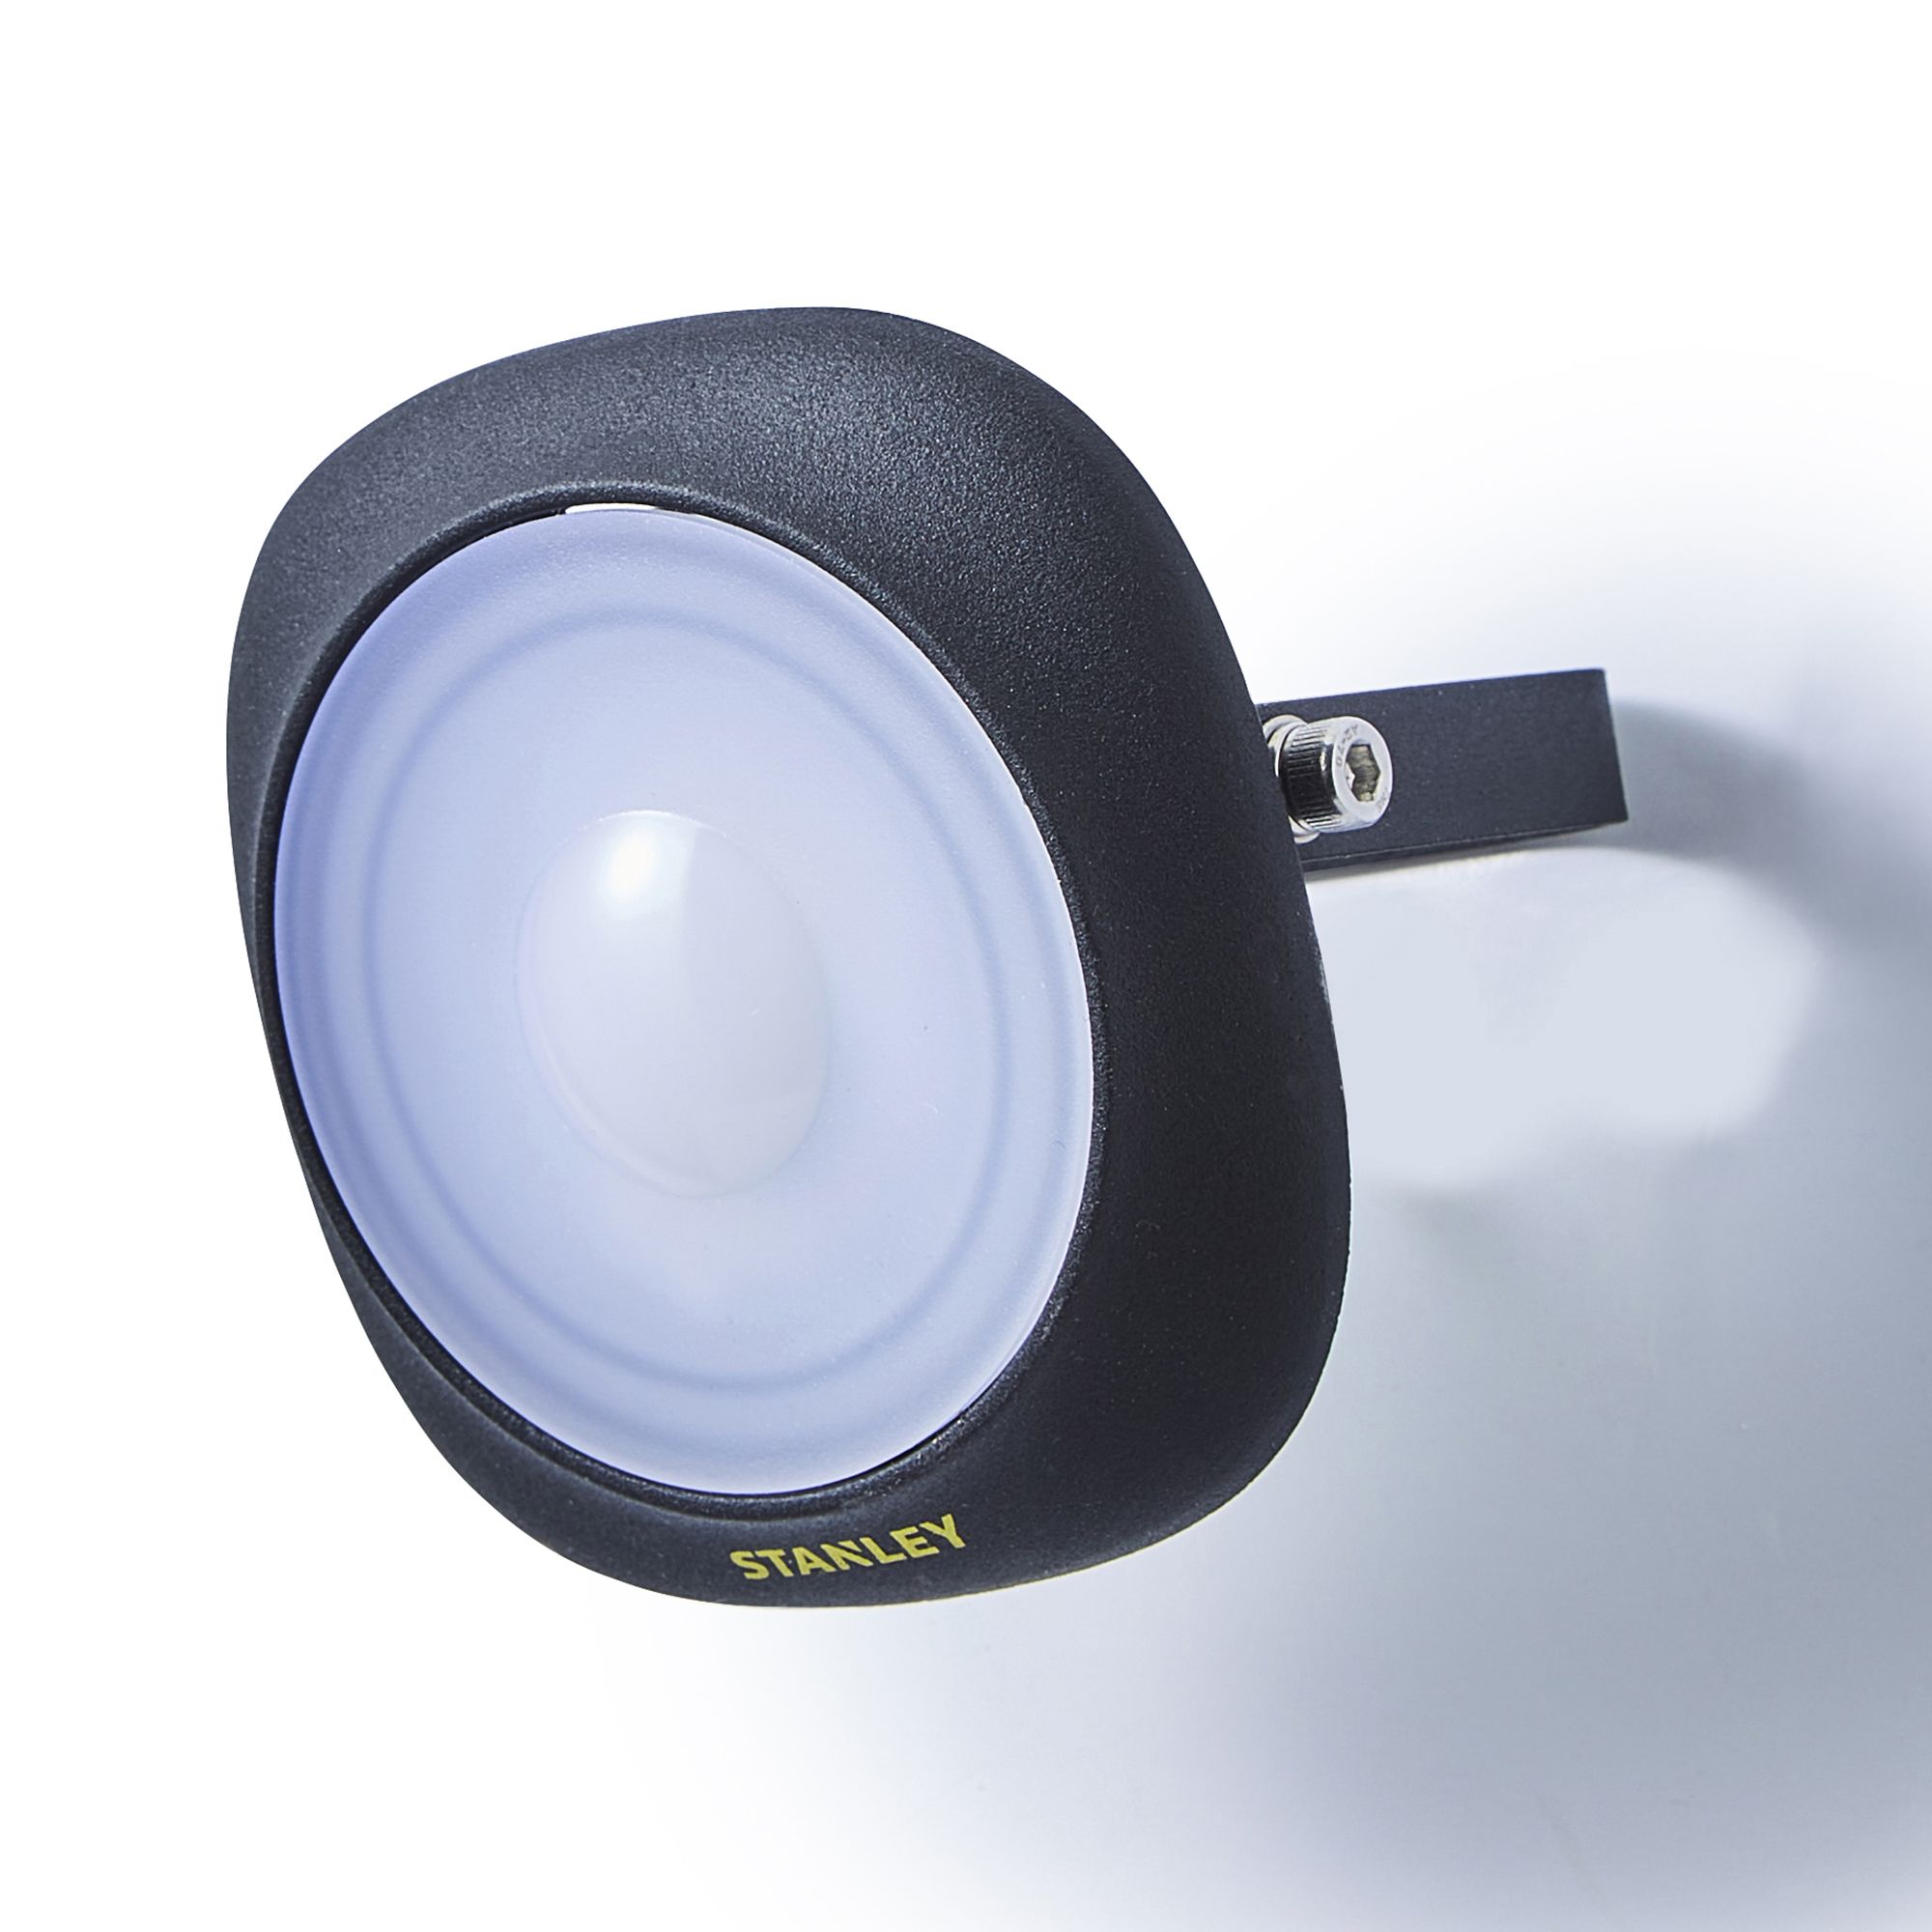 Stanley Black Mains-powered Cool daylight LED Without sensor Slimline floodlight 900lm